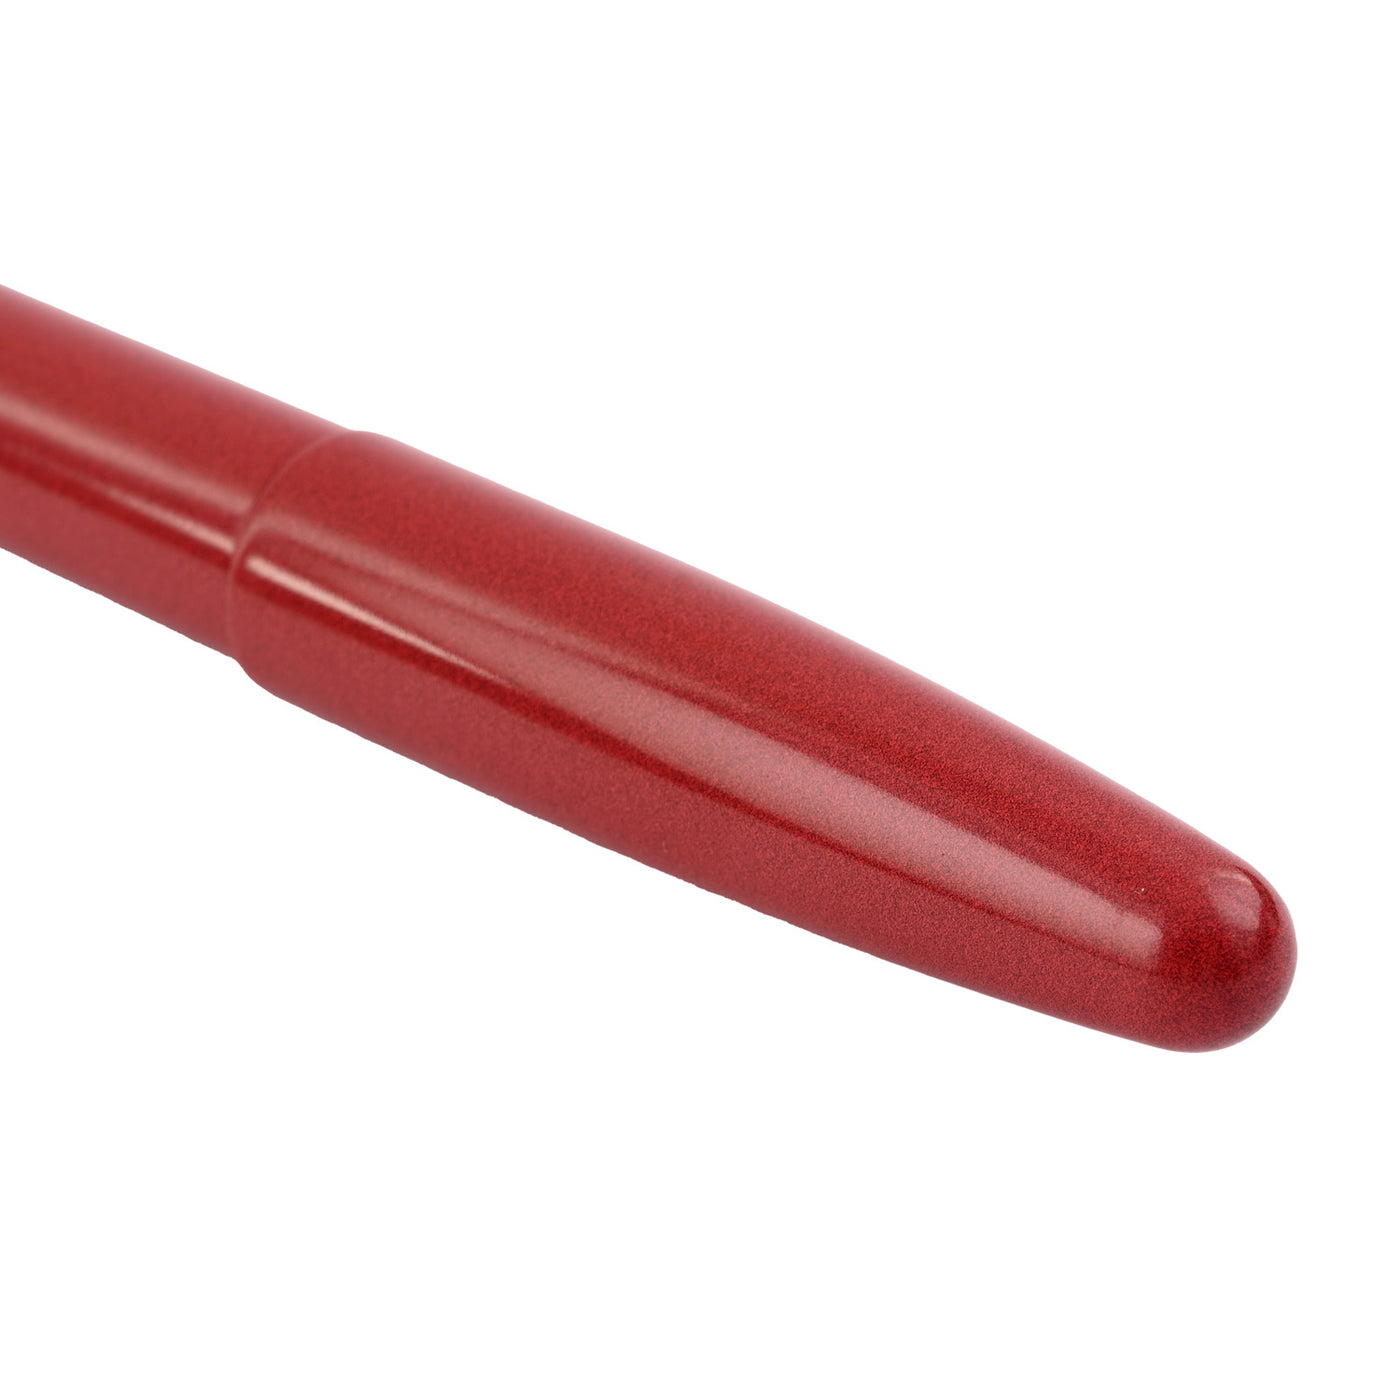 Wancher Dream True Ebonite Fountain Pen - Sand Red 2